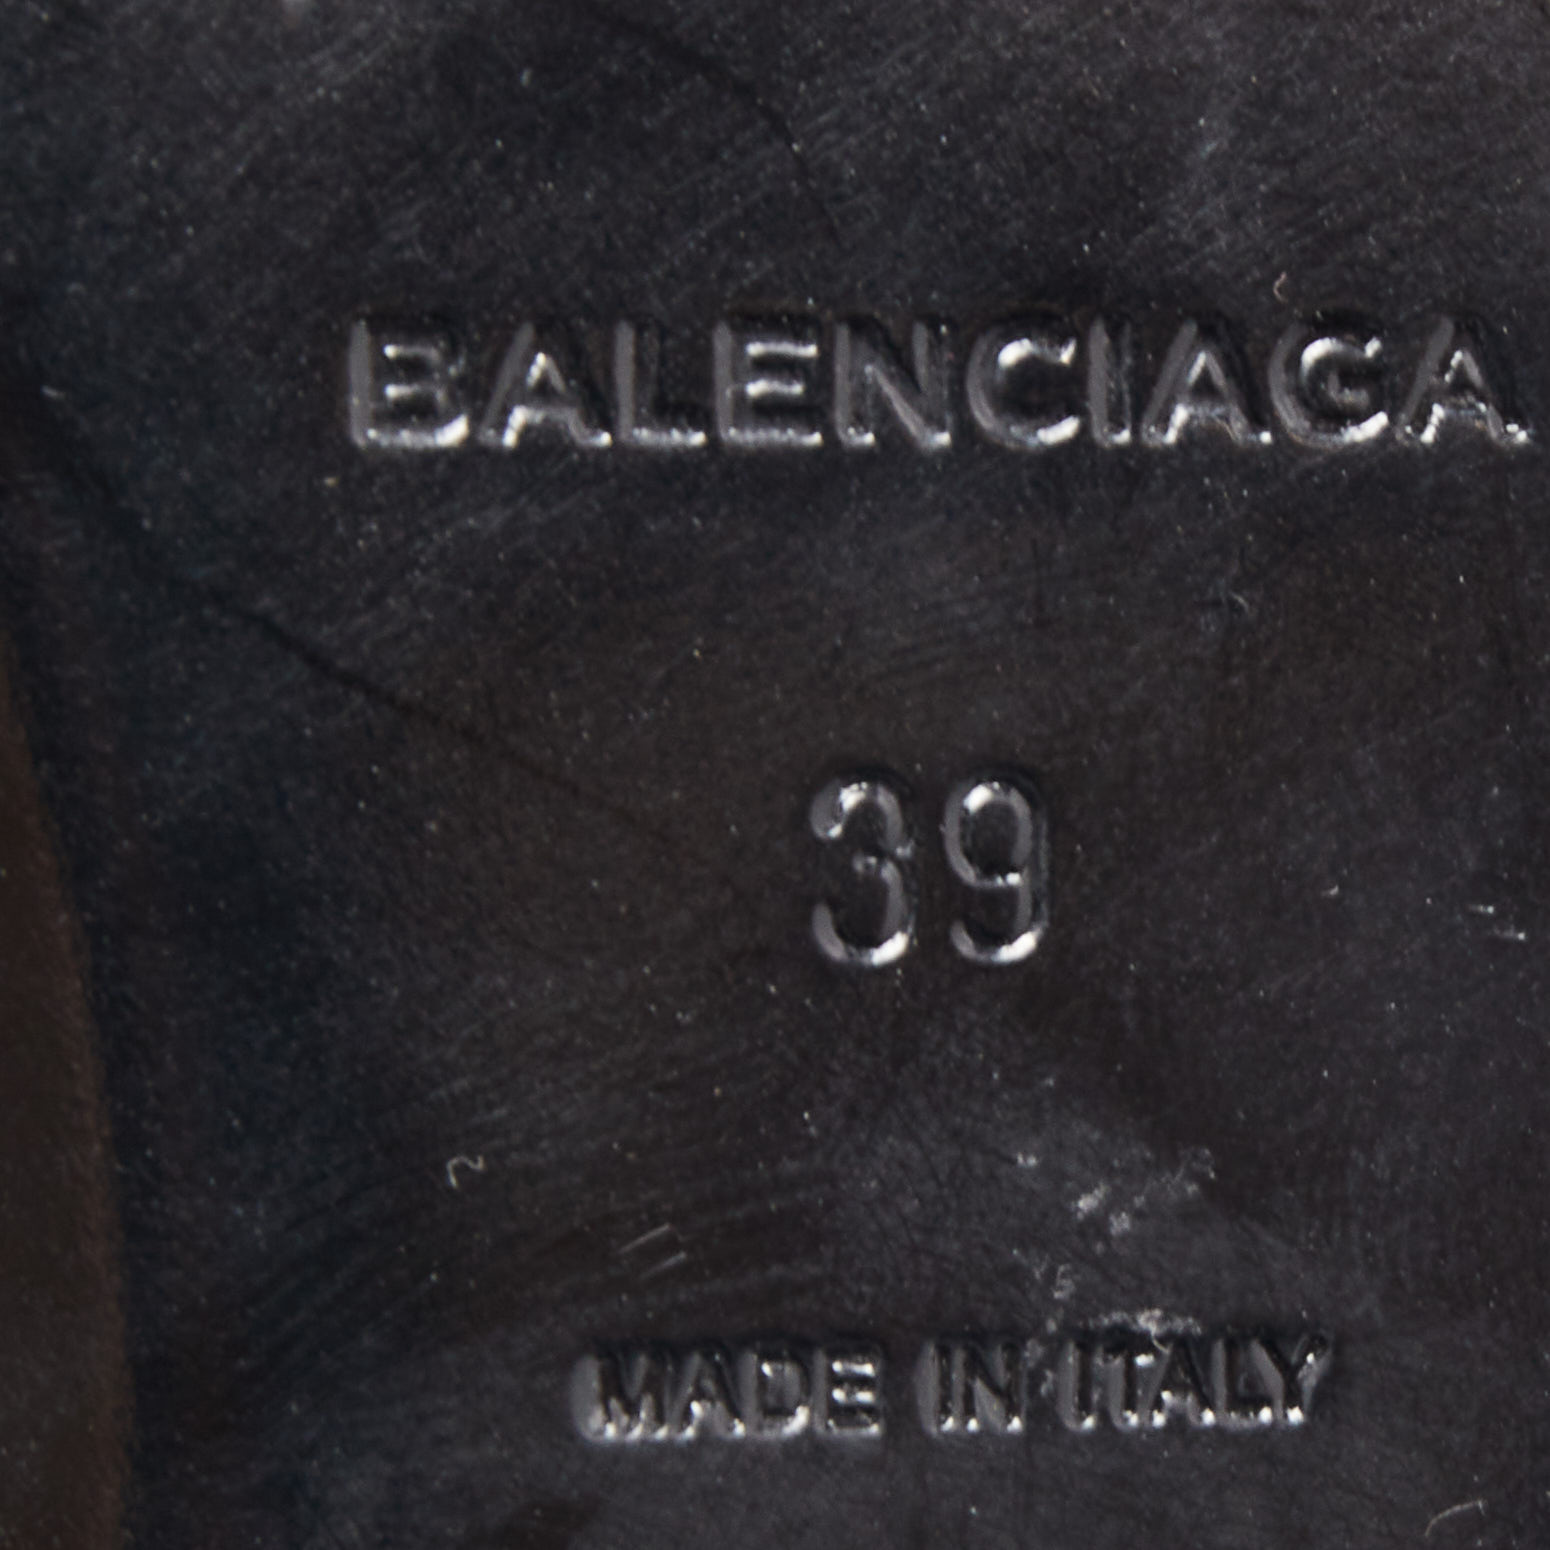 Balenciaga Black Leather Ballet Flats Size 39